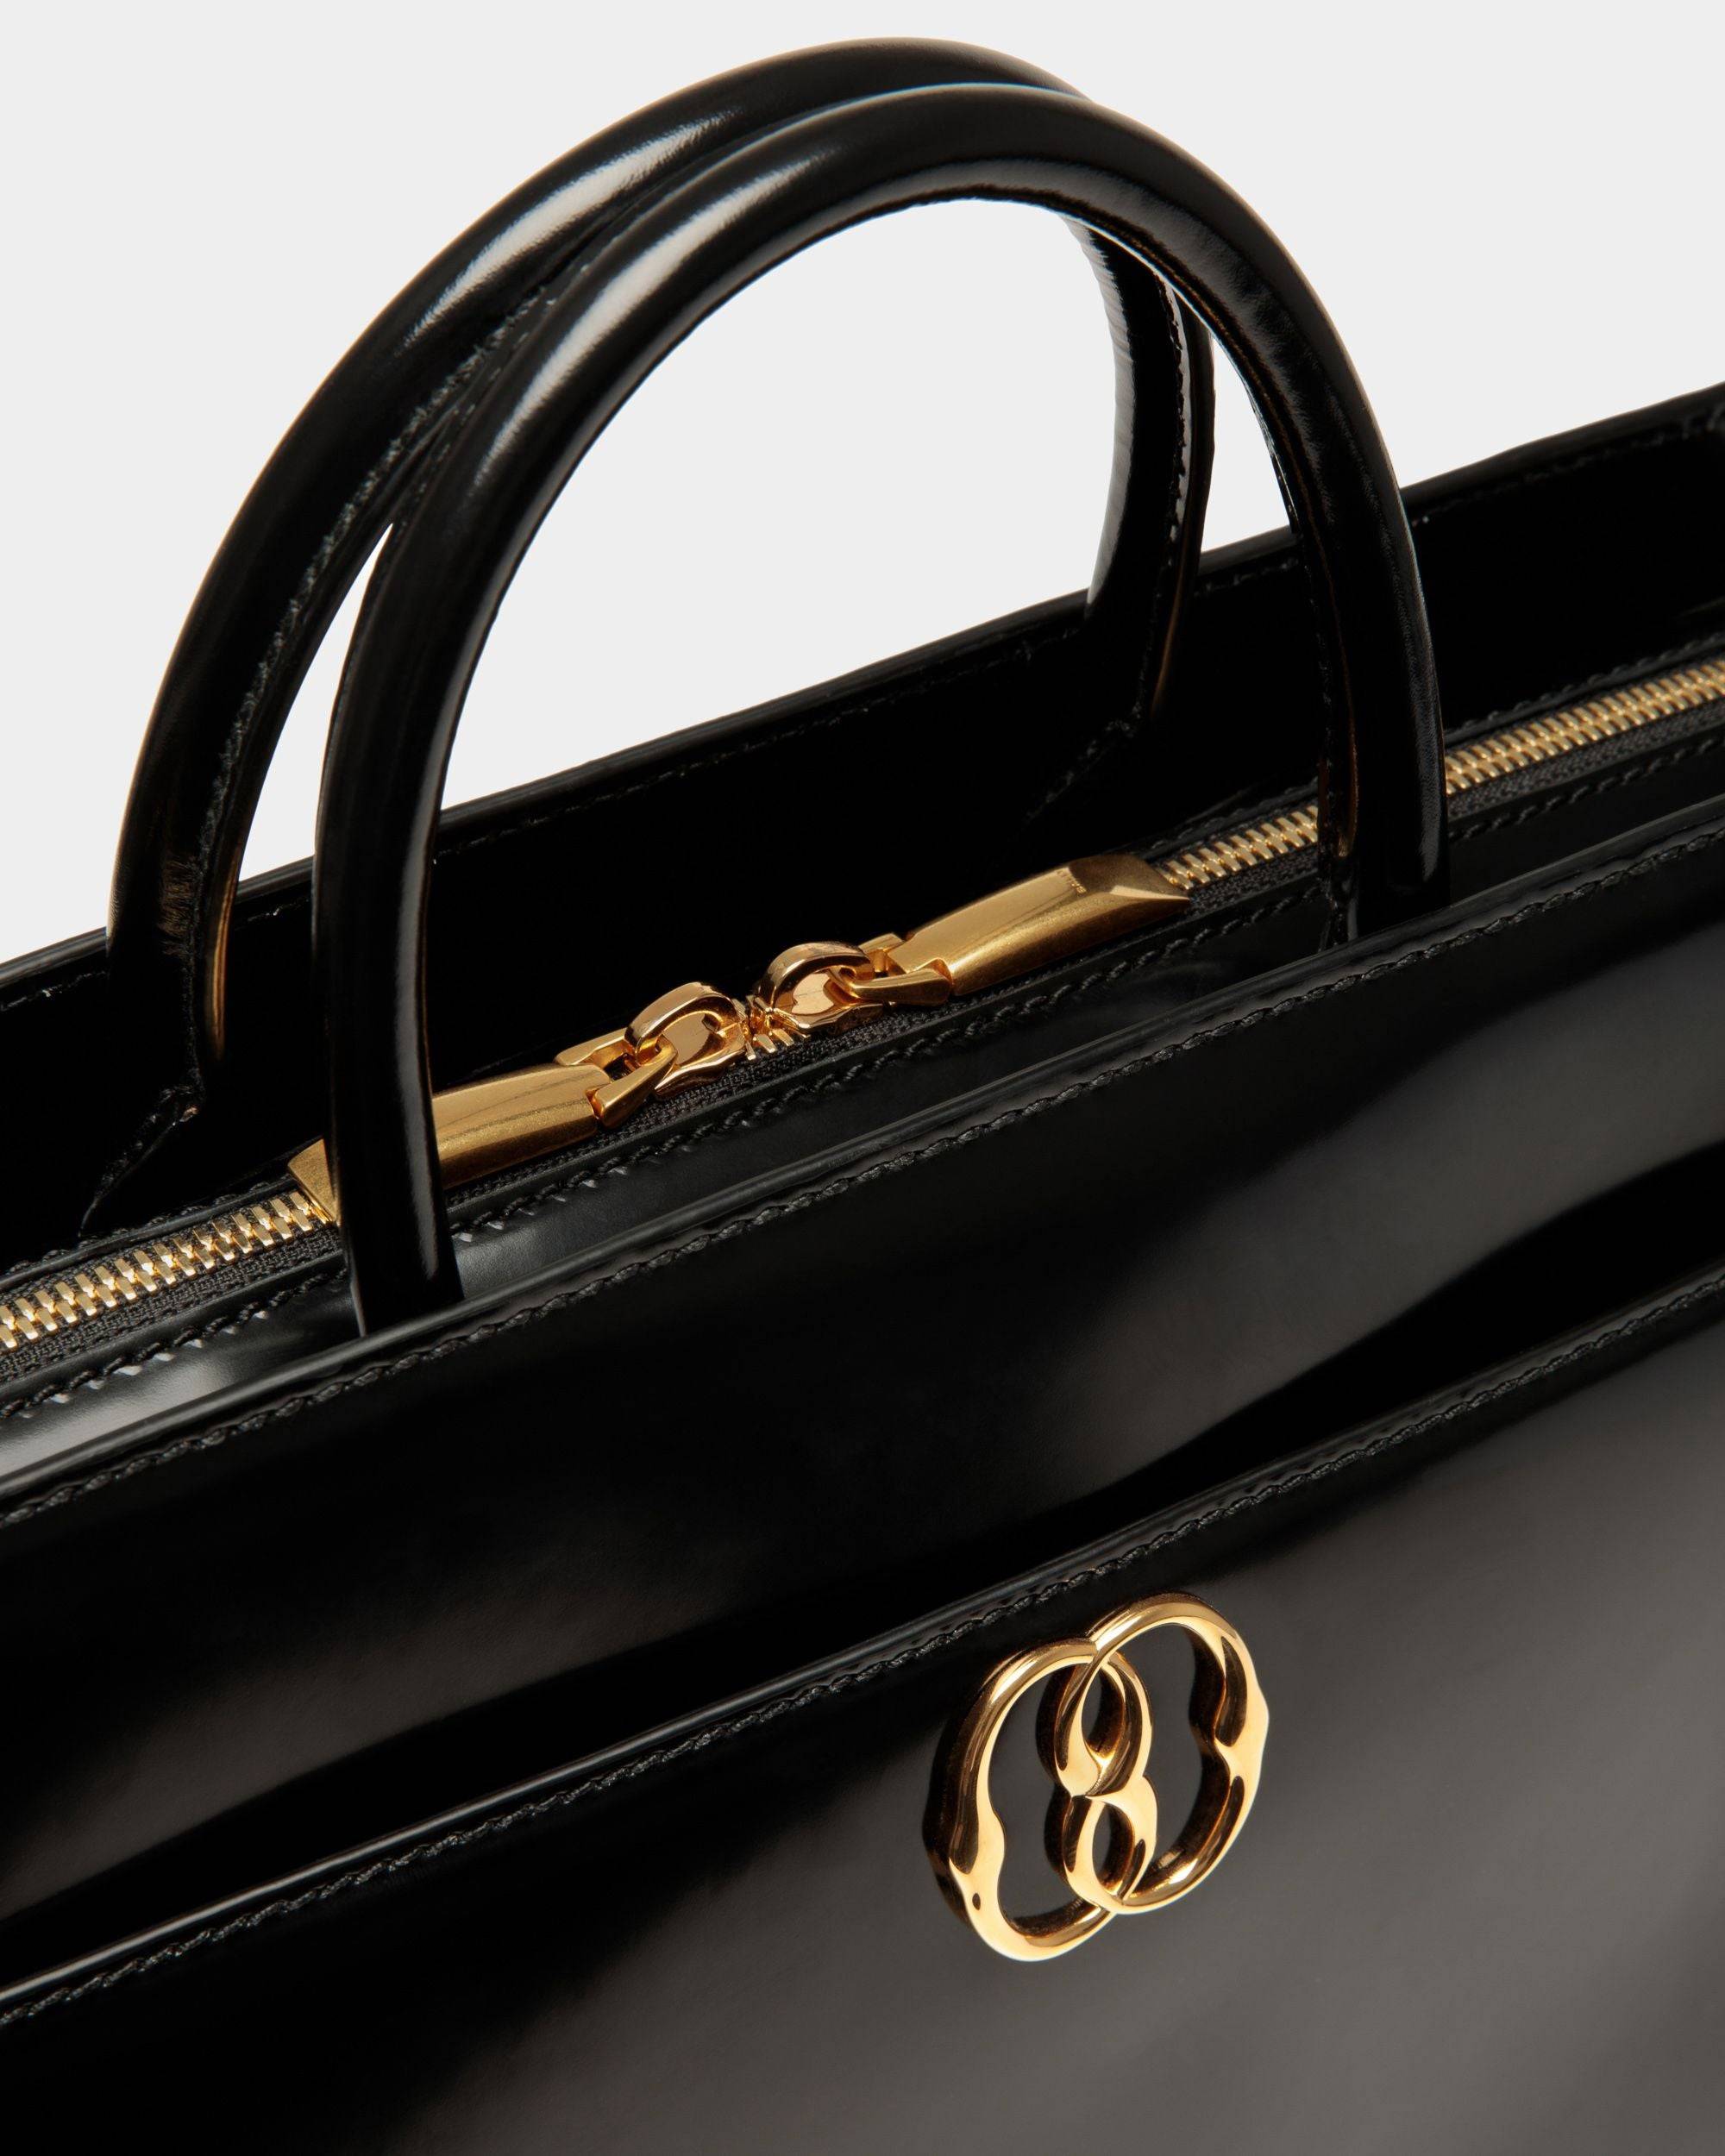 Emblem | Women's Tote Bag in Black Brushed Leather | Bally | Still Life Detail